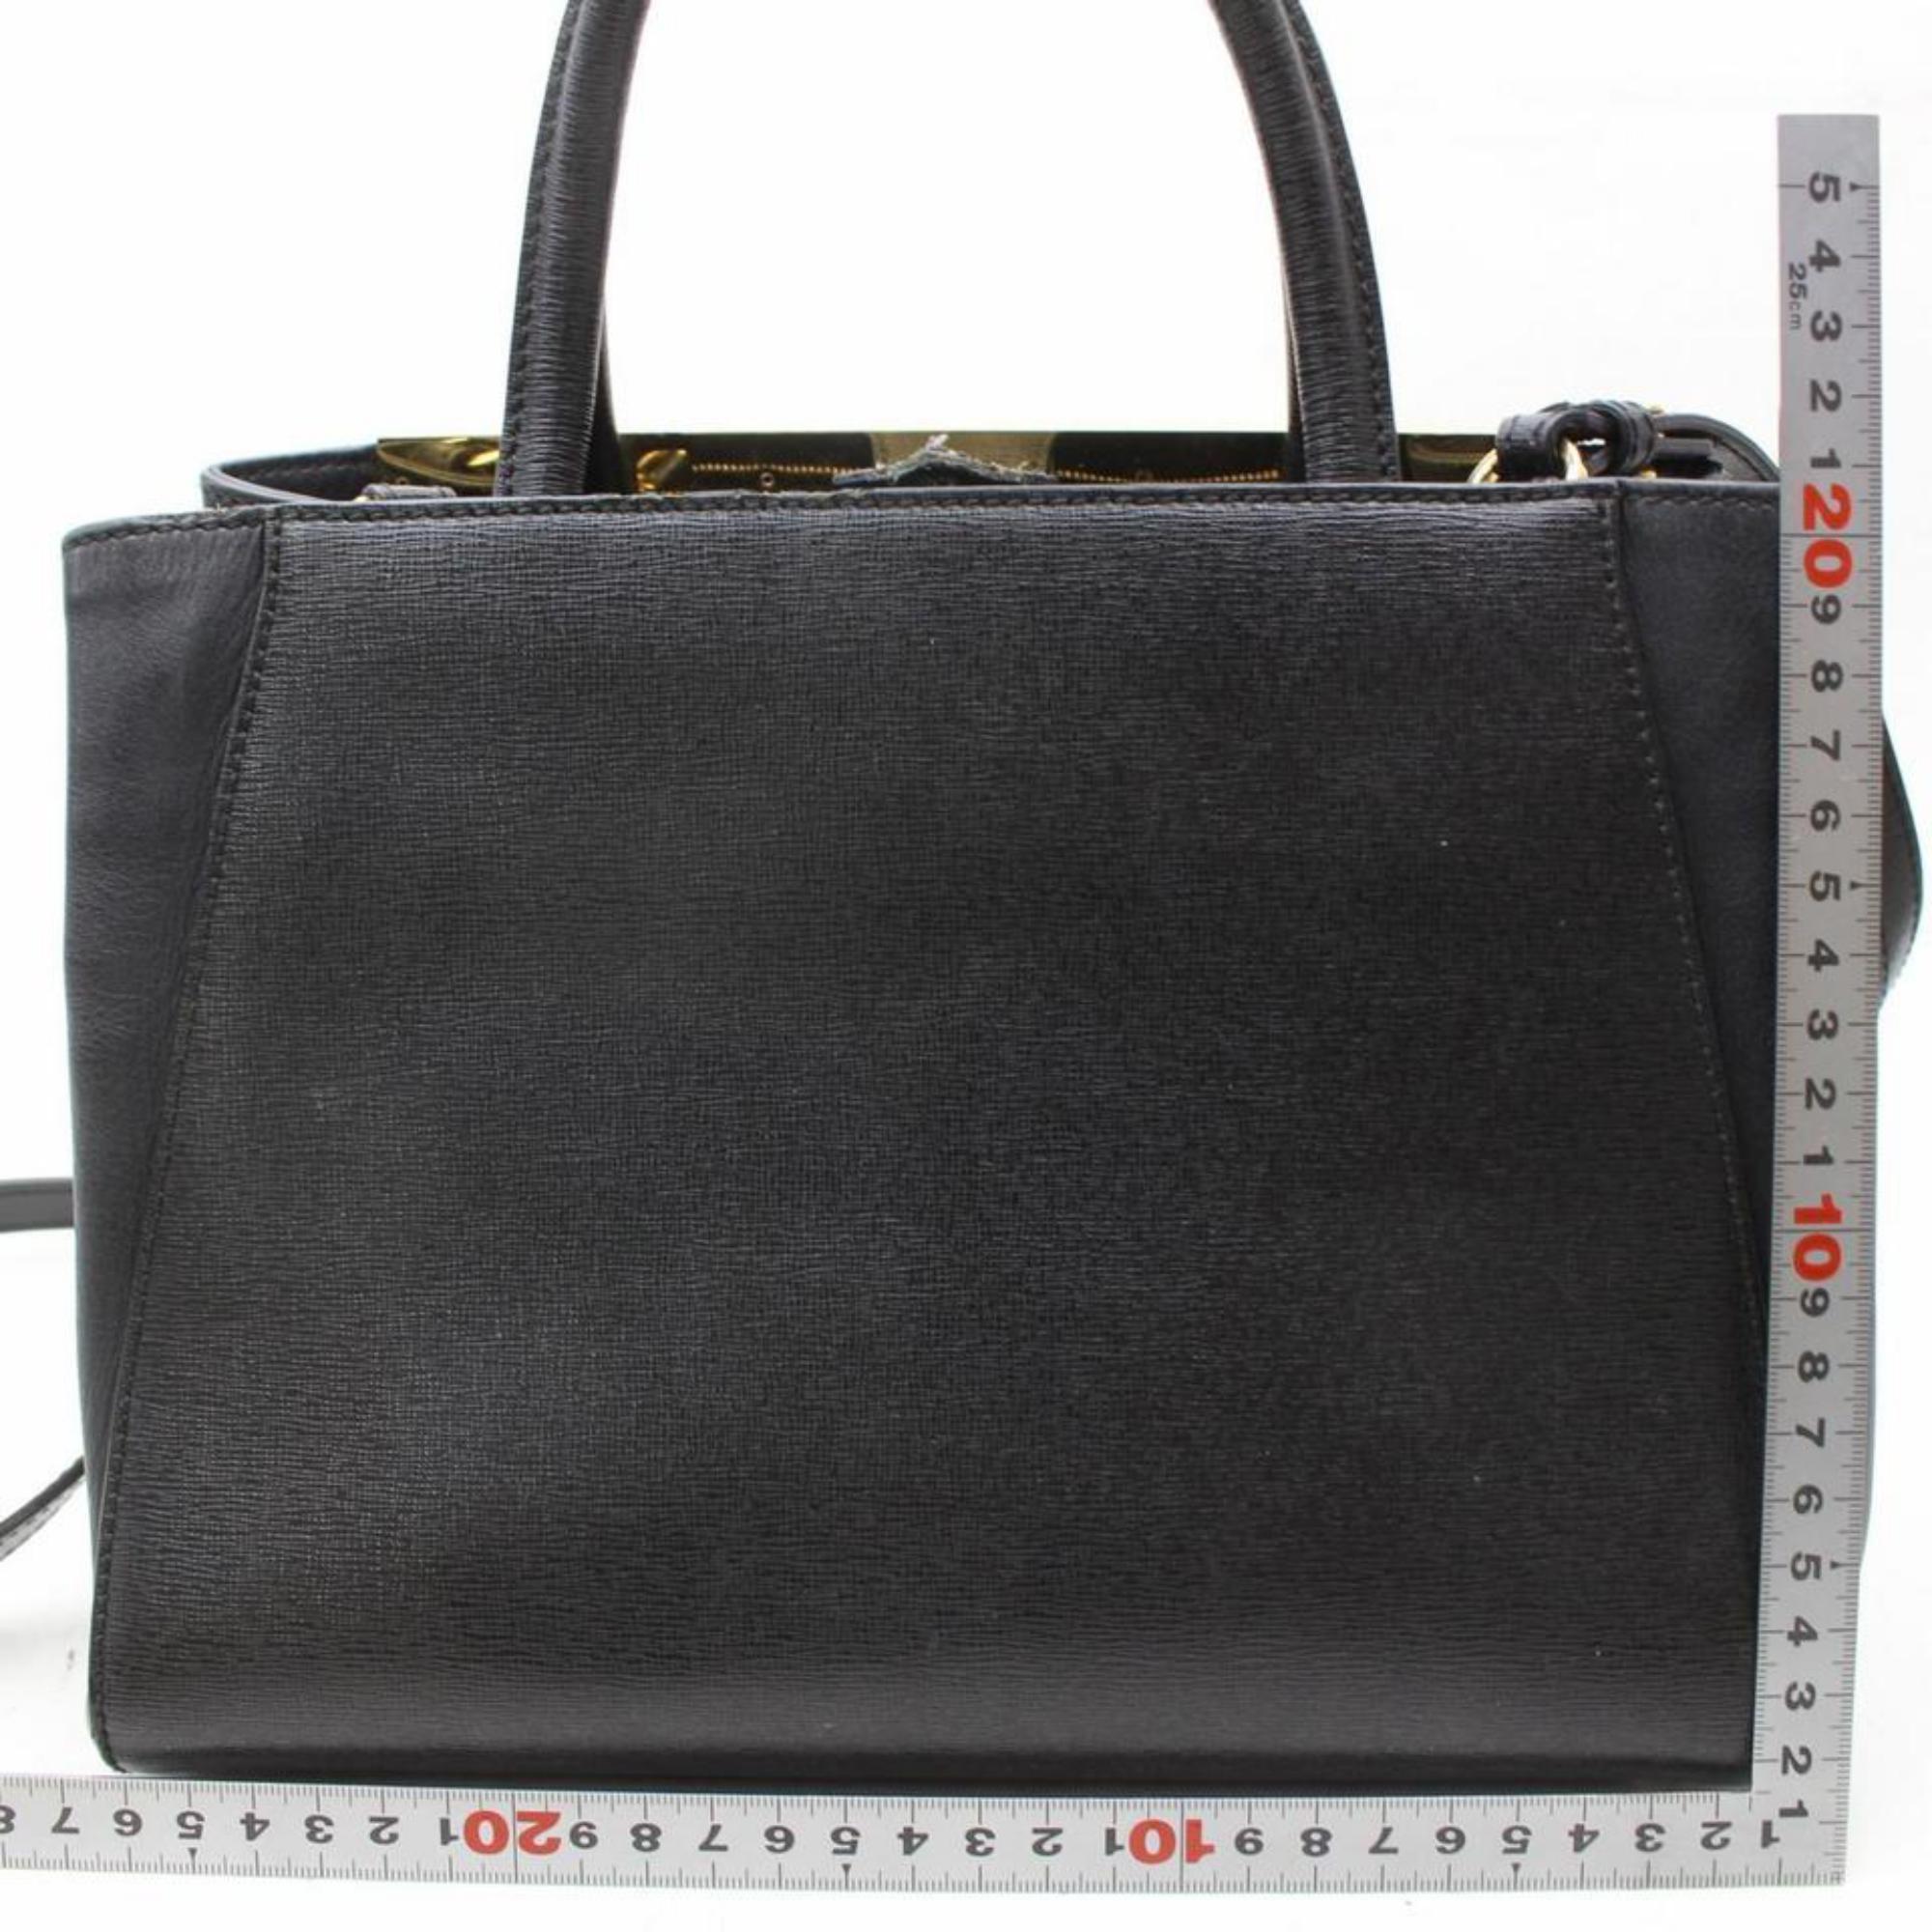 Fendi Petite 2jours 2way Tote 869621 Black Leather Shoulder Bag For Sale 1